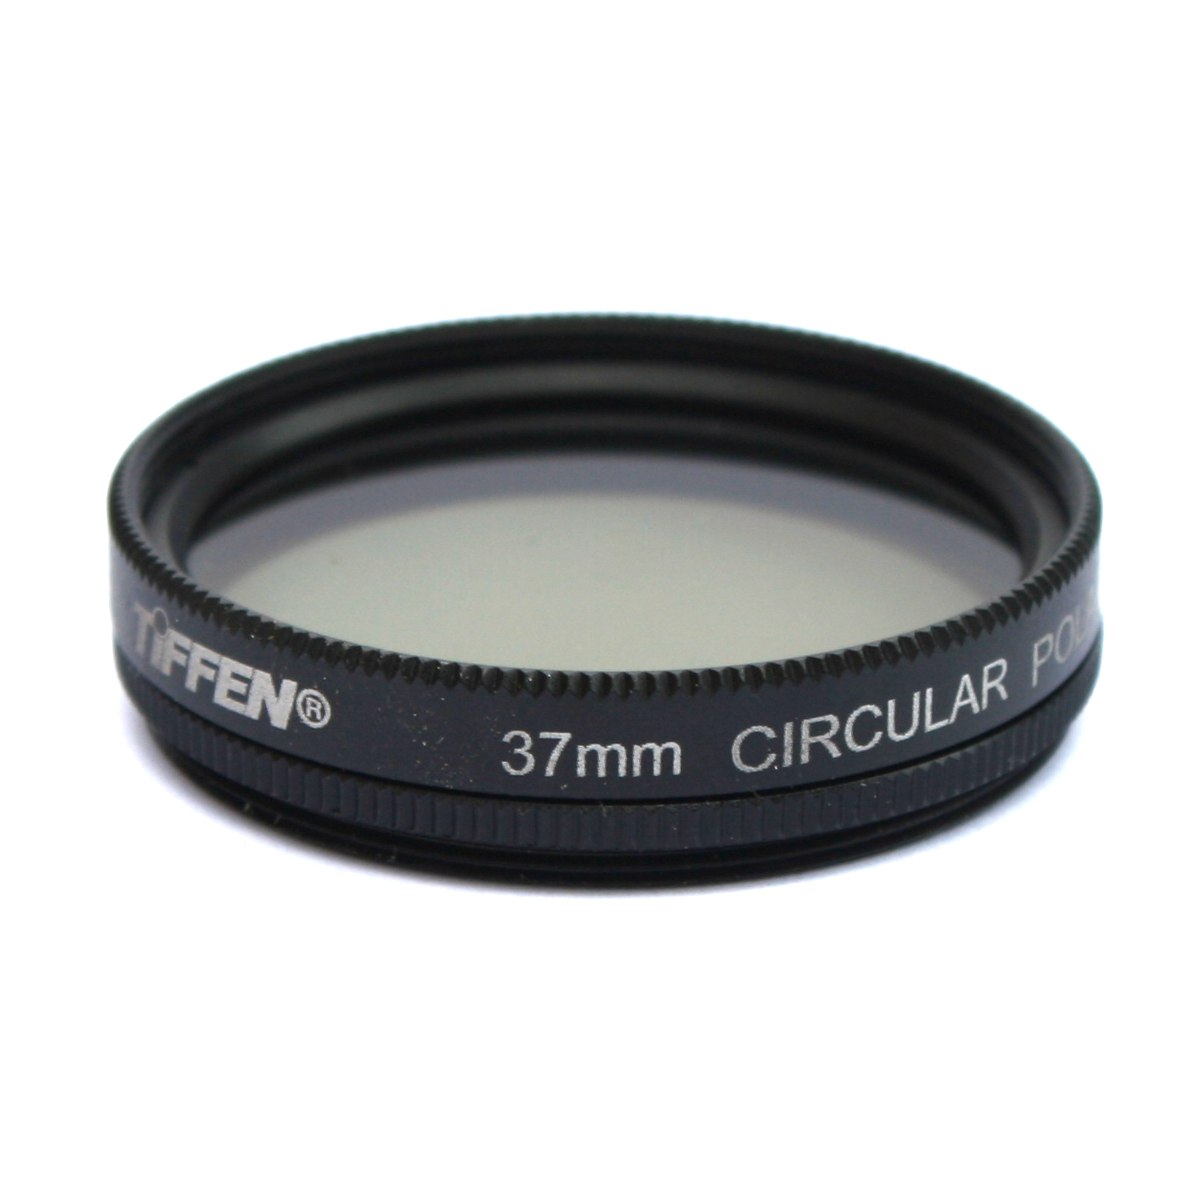 Tiffen 37mm Circular Polarizer Filter